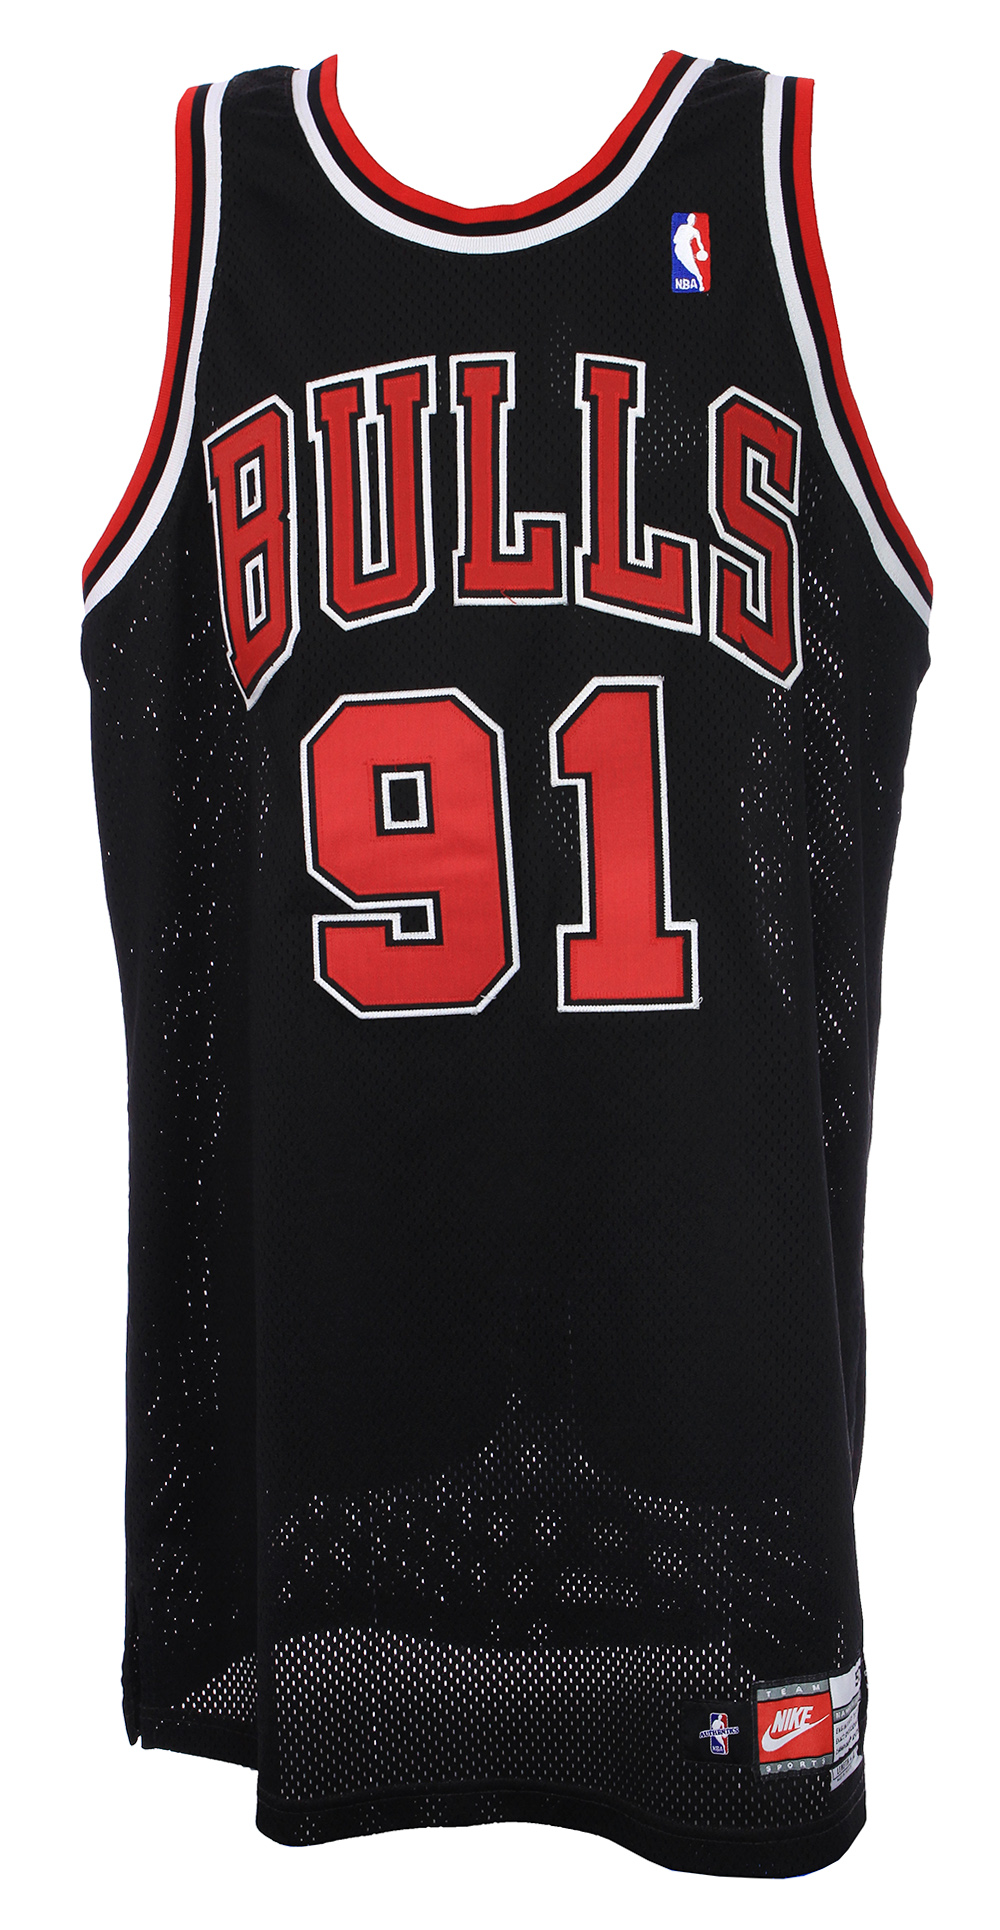 1996-97 Dennis Rodman Game Worn Signed Chicago Bulls Uniform, Lot #13576